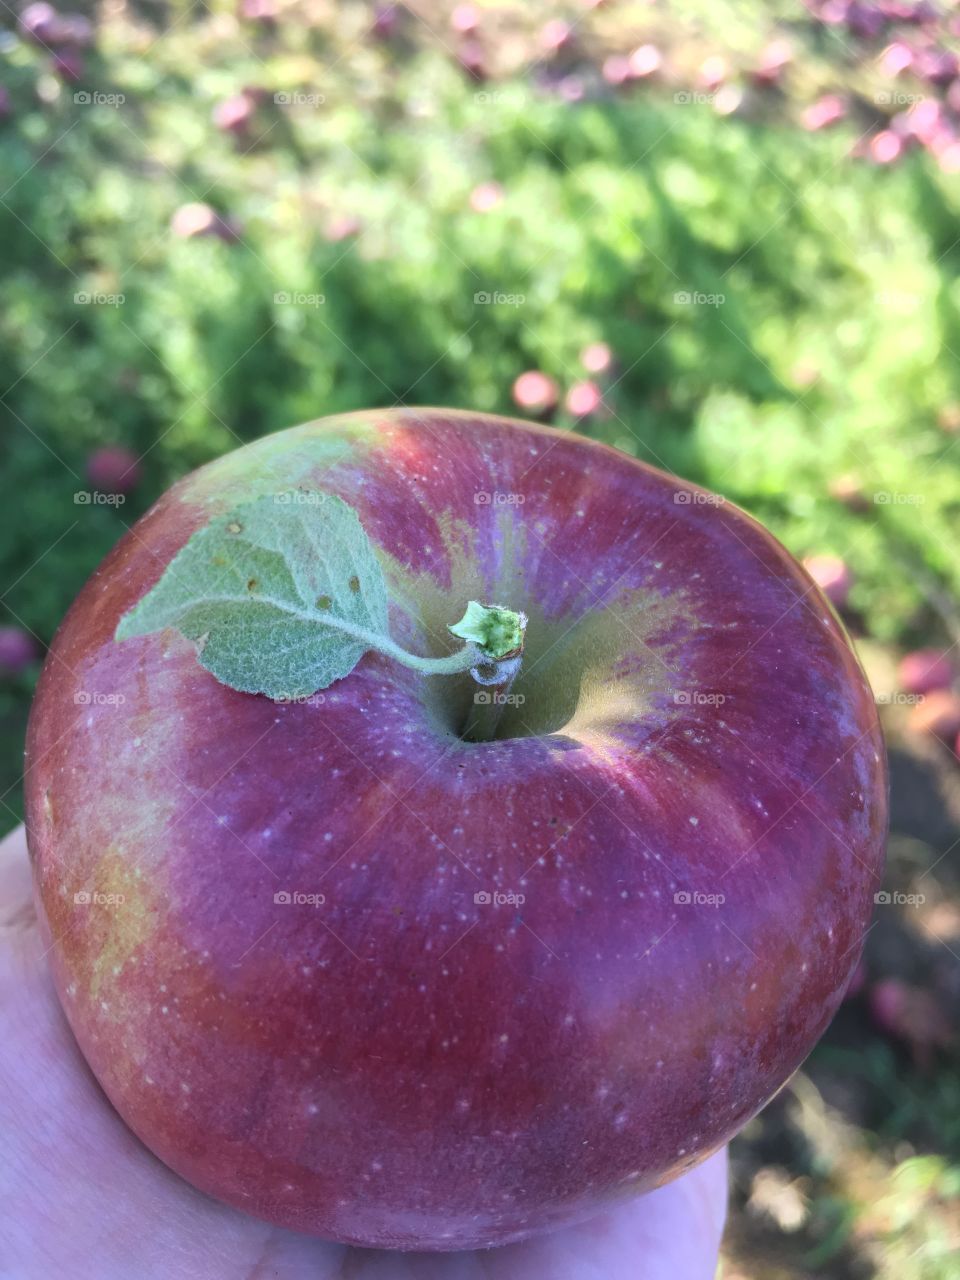 Perfect apple. 